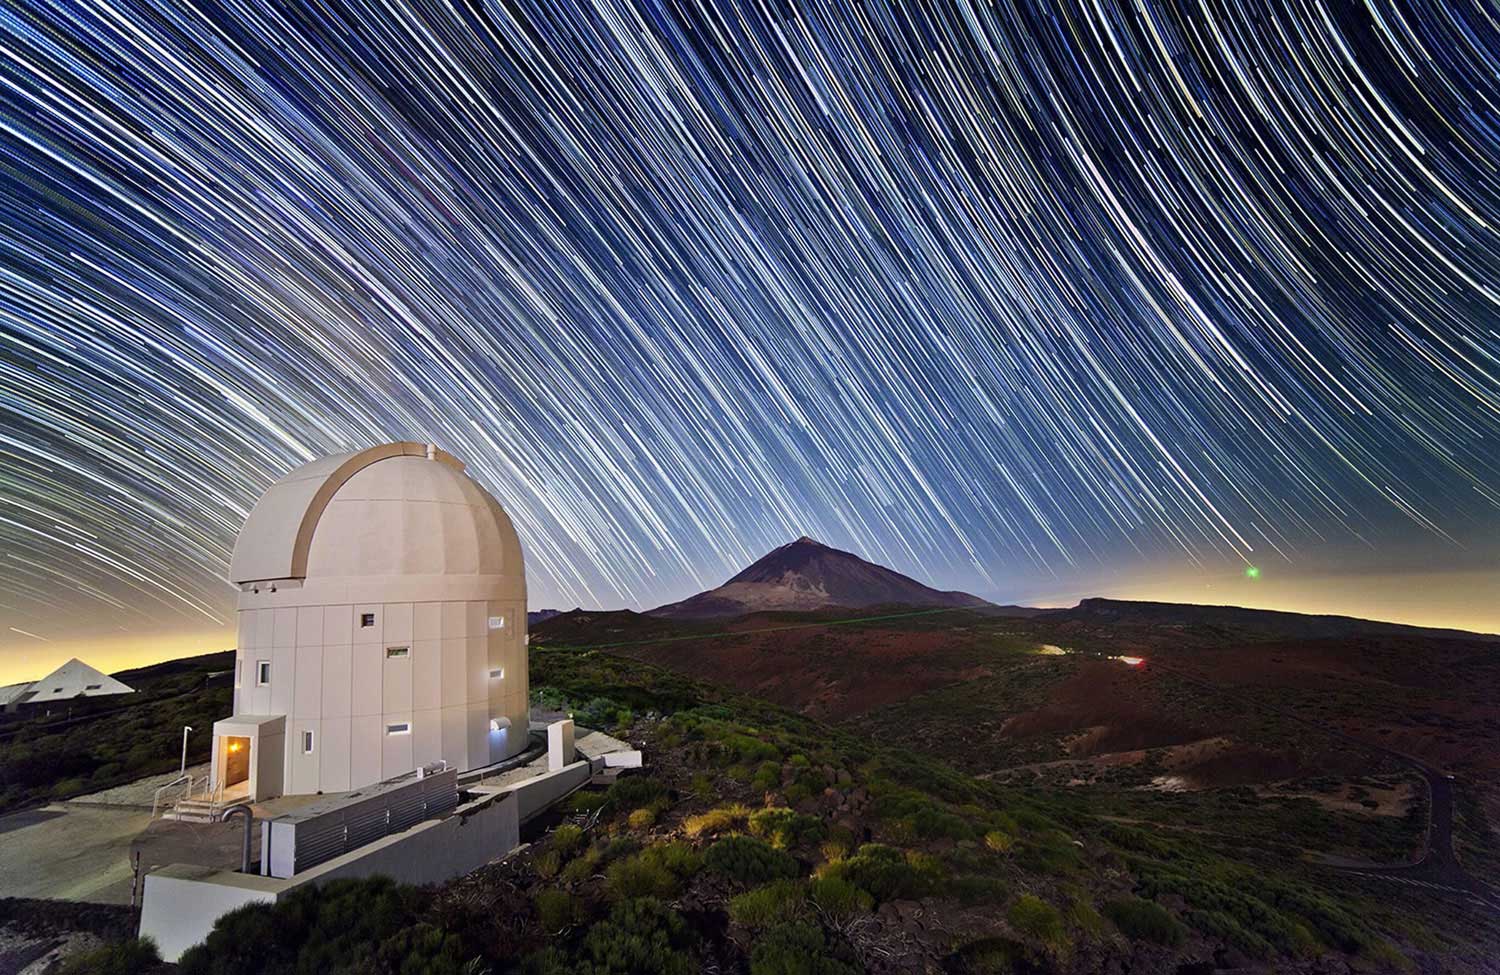 ESA's Optical Ground Station in Tenerife